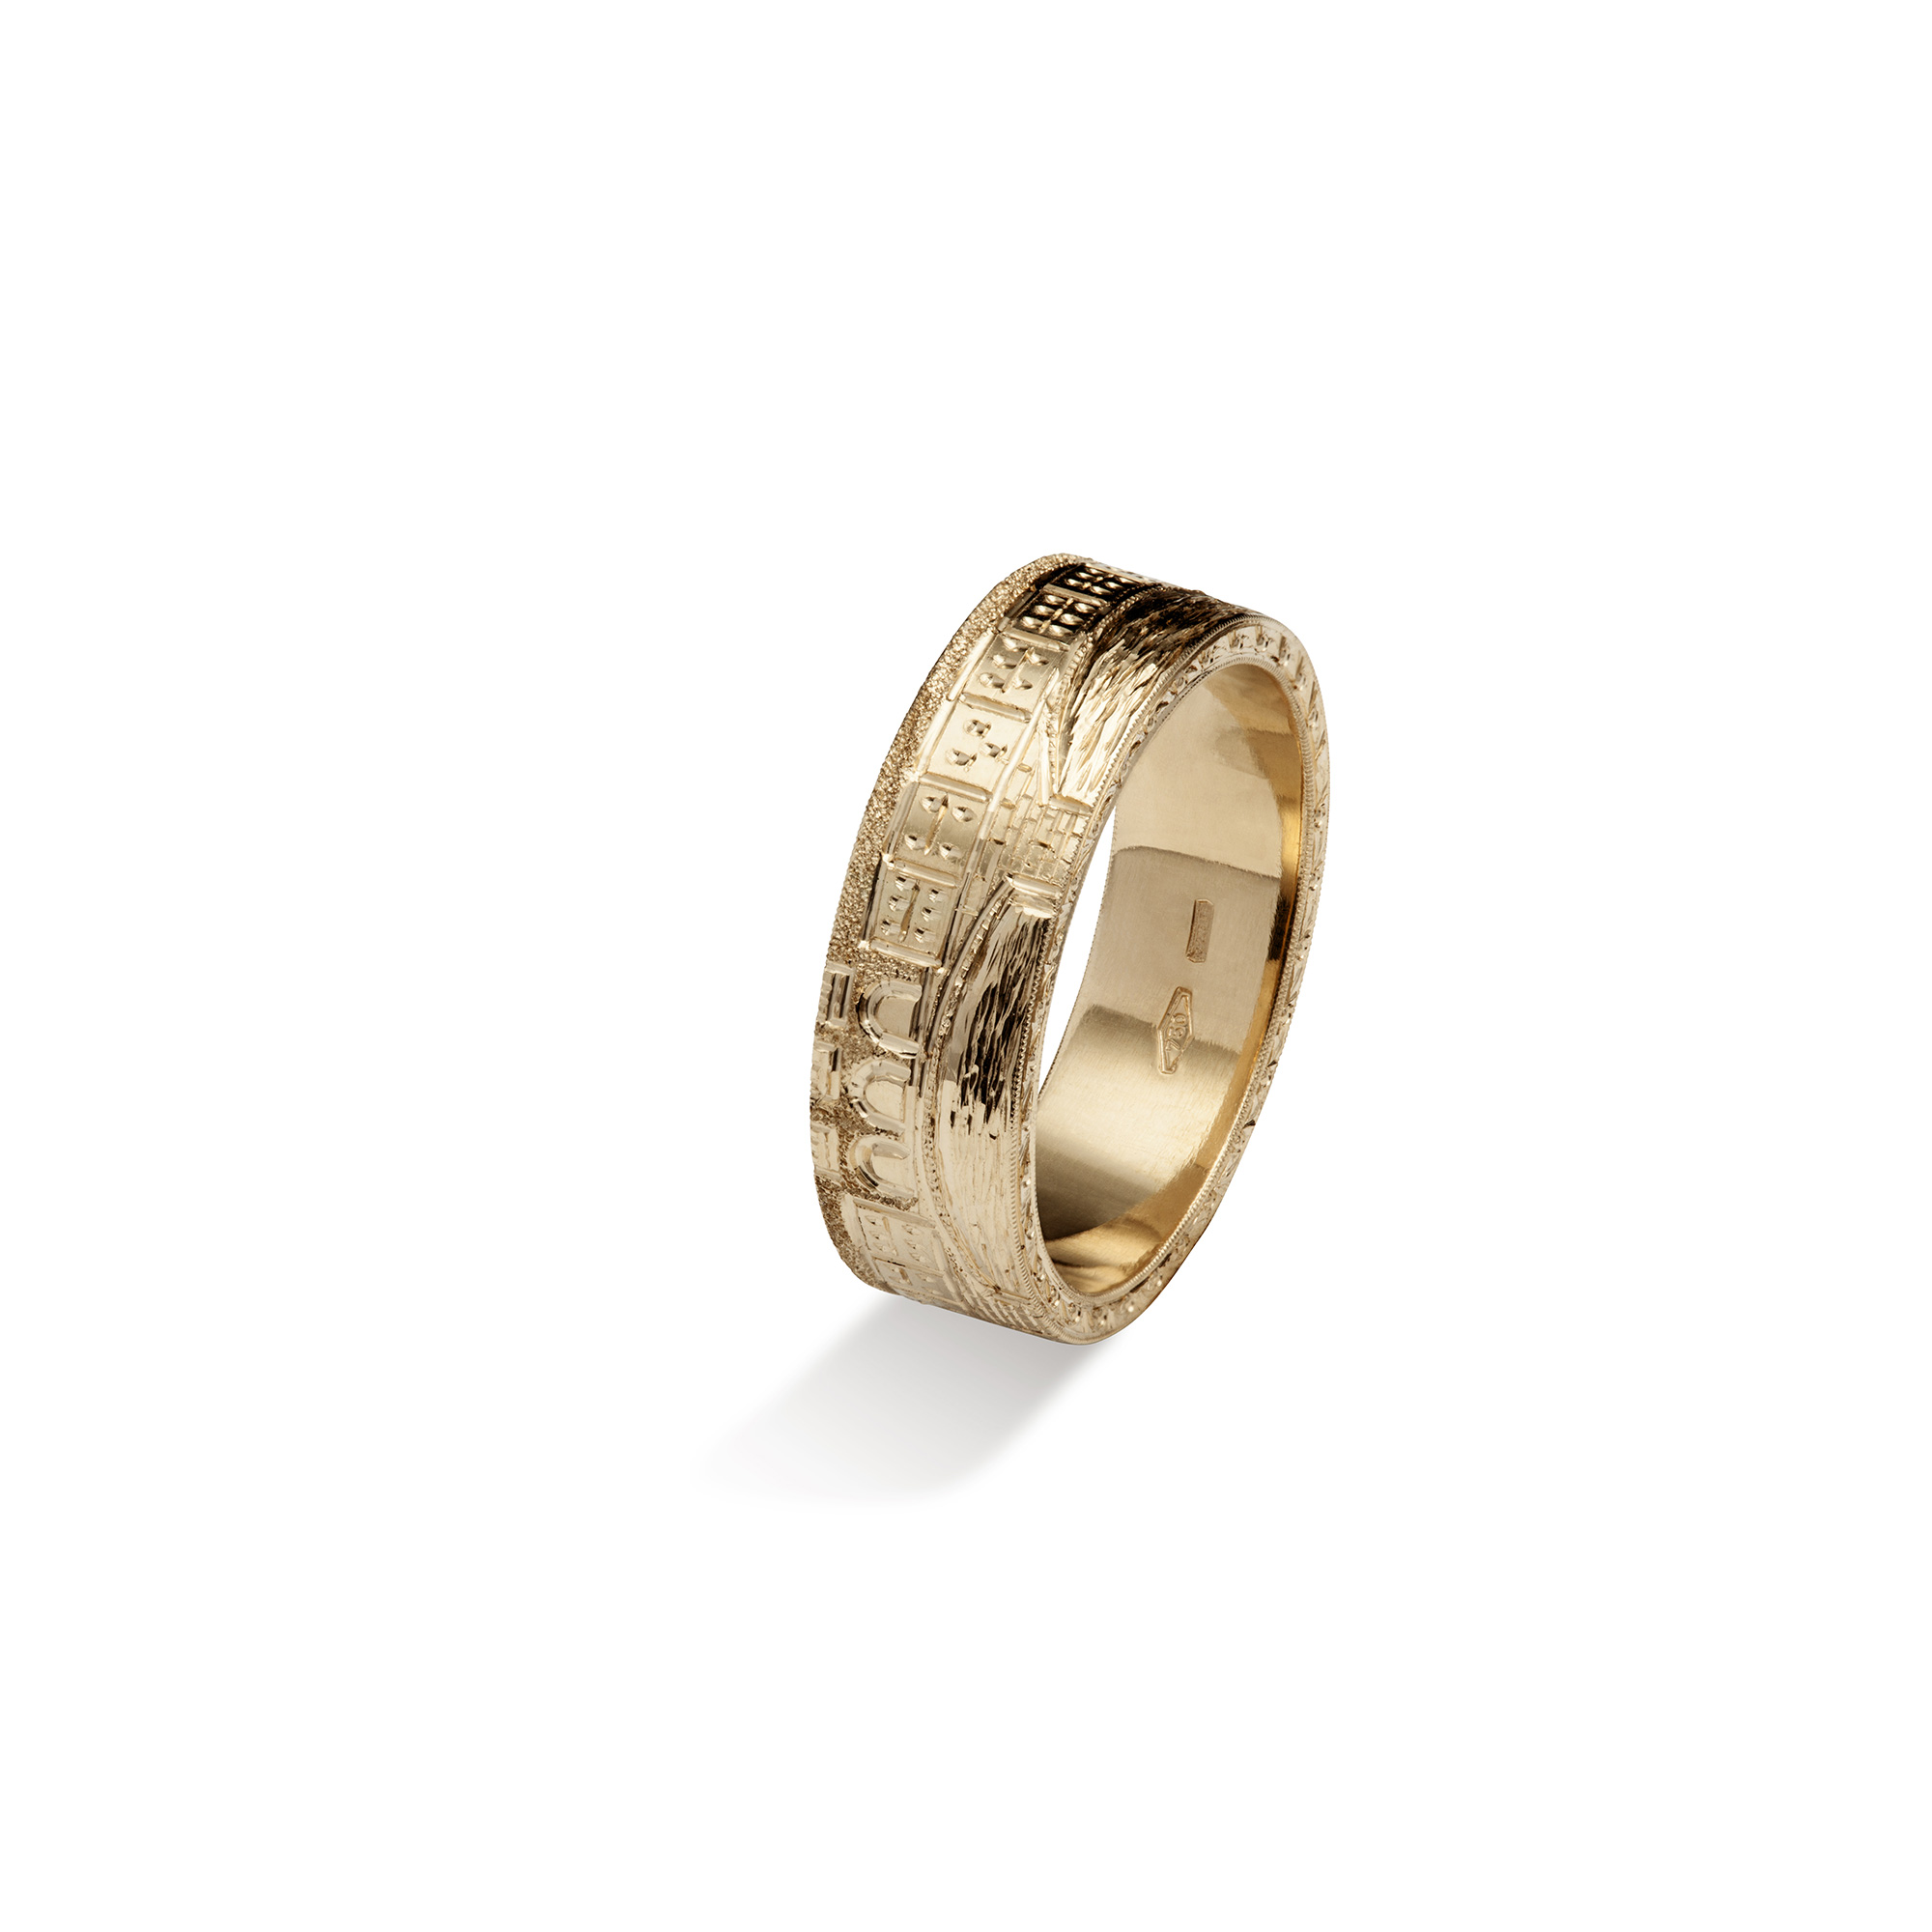 Fratelli Piccini Ponte Vecchio gold engraved ring